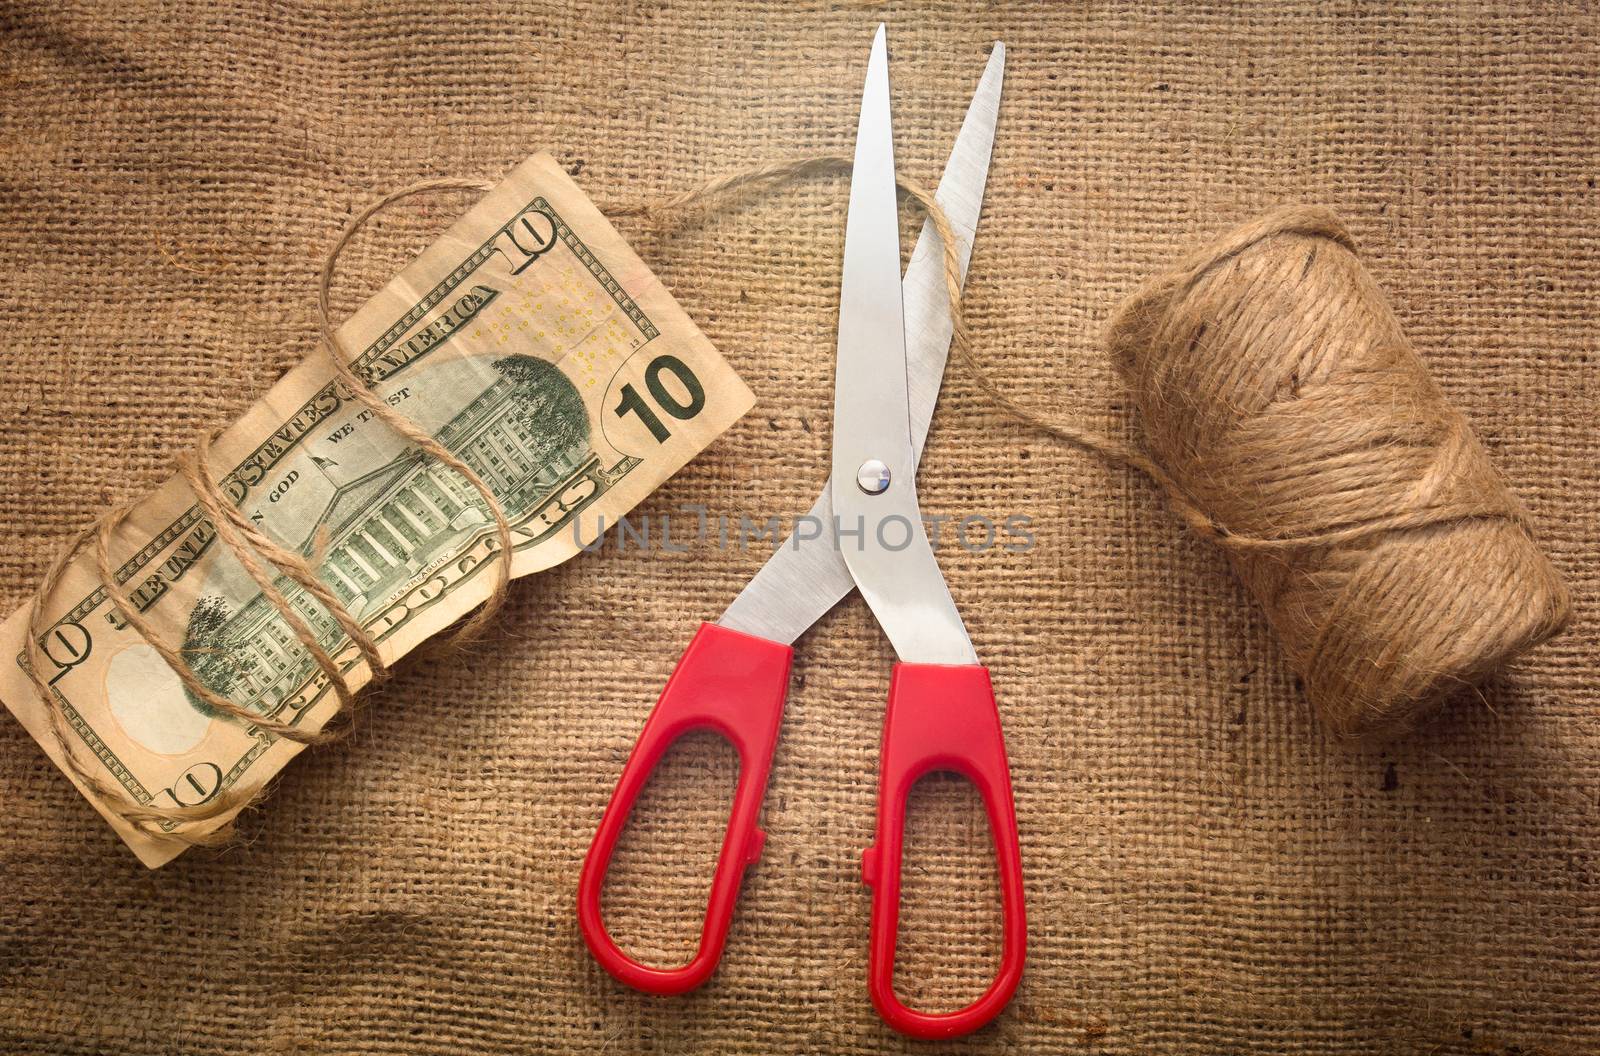 A scissor cutting a rope holding a 10 dollar bill